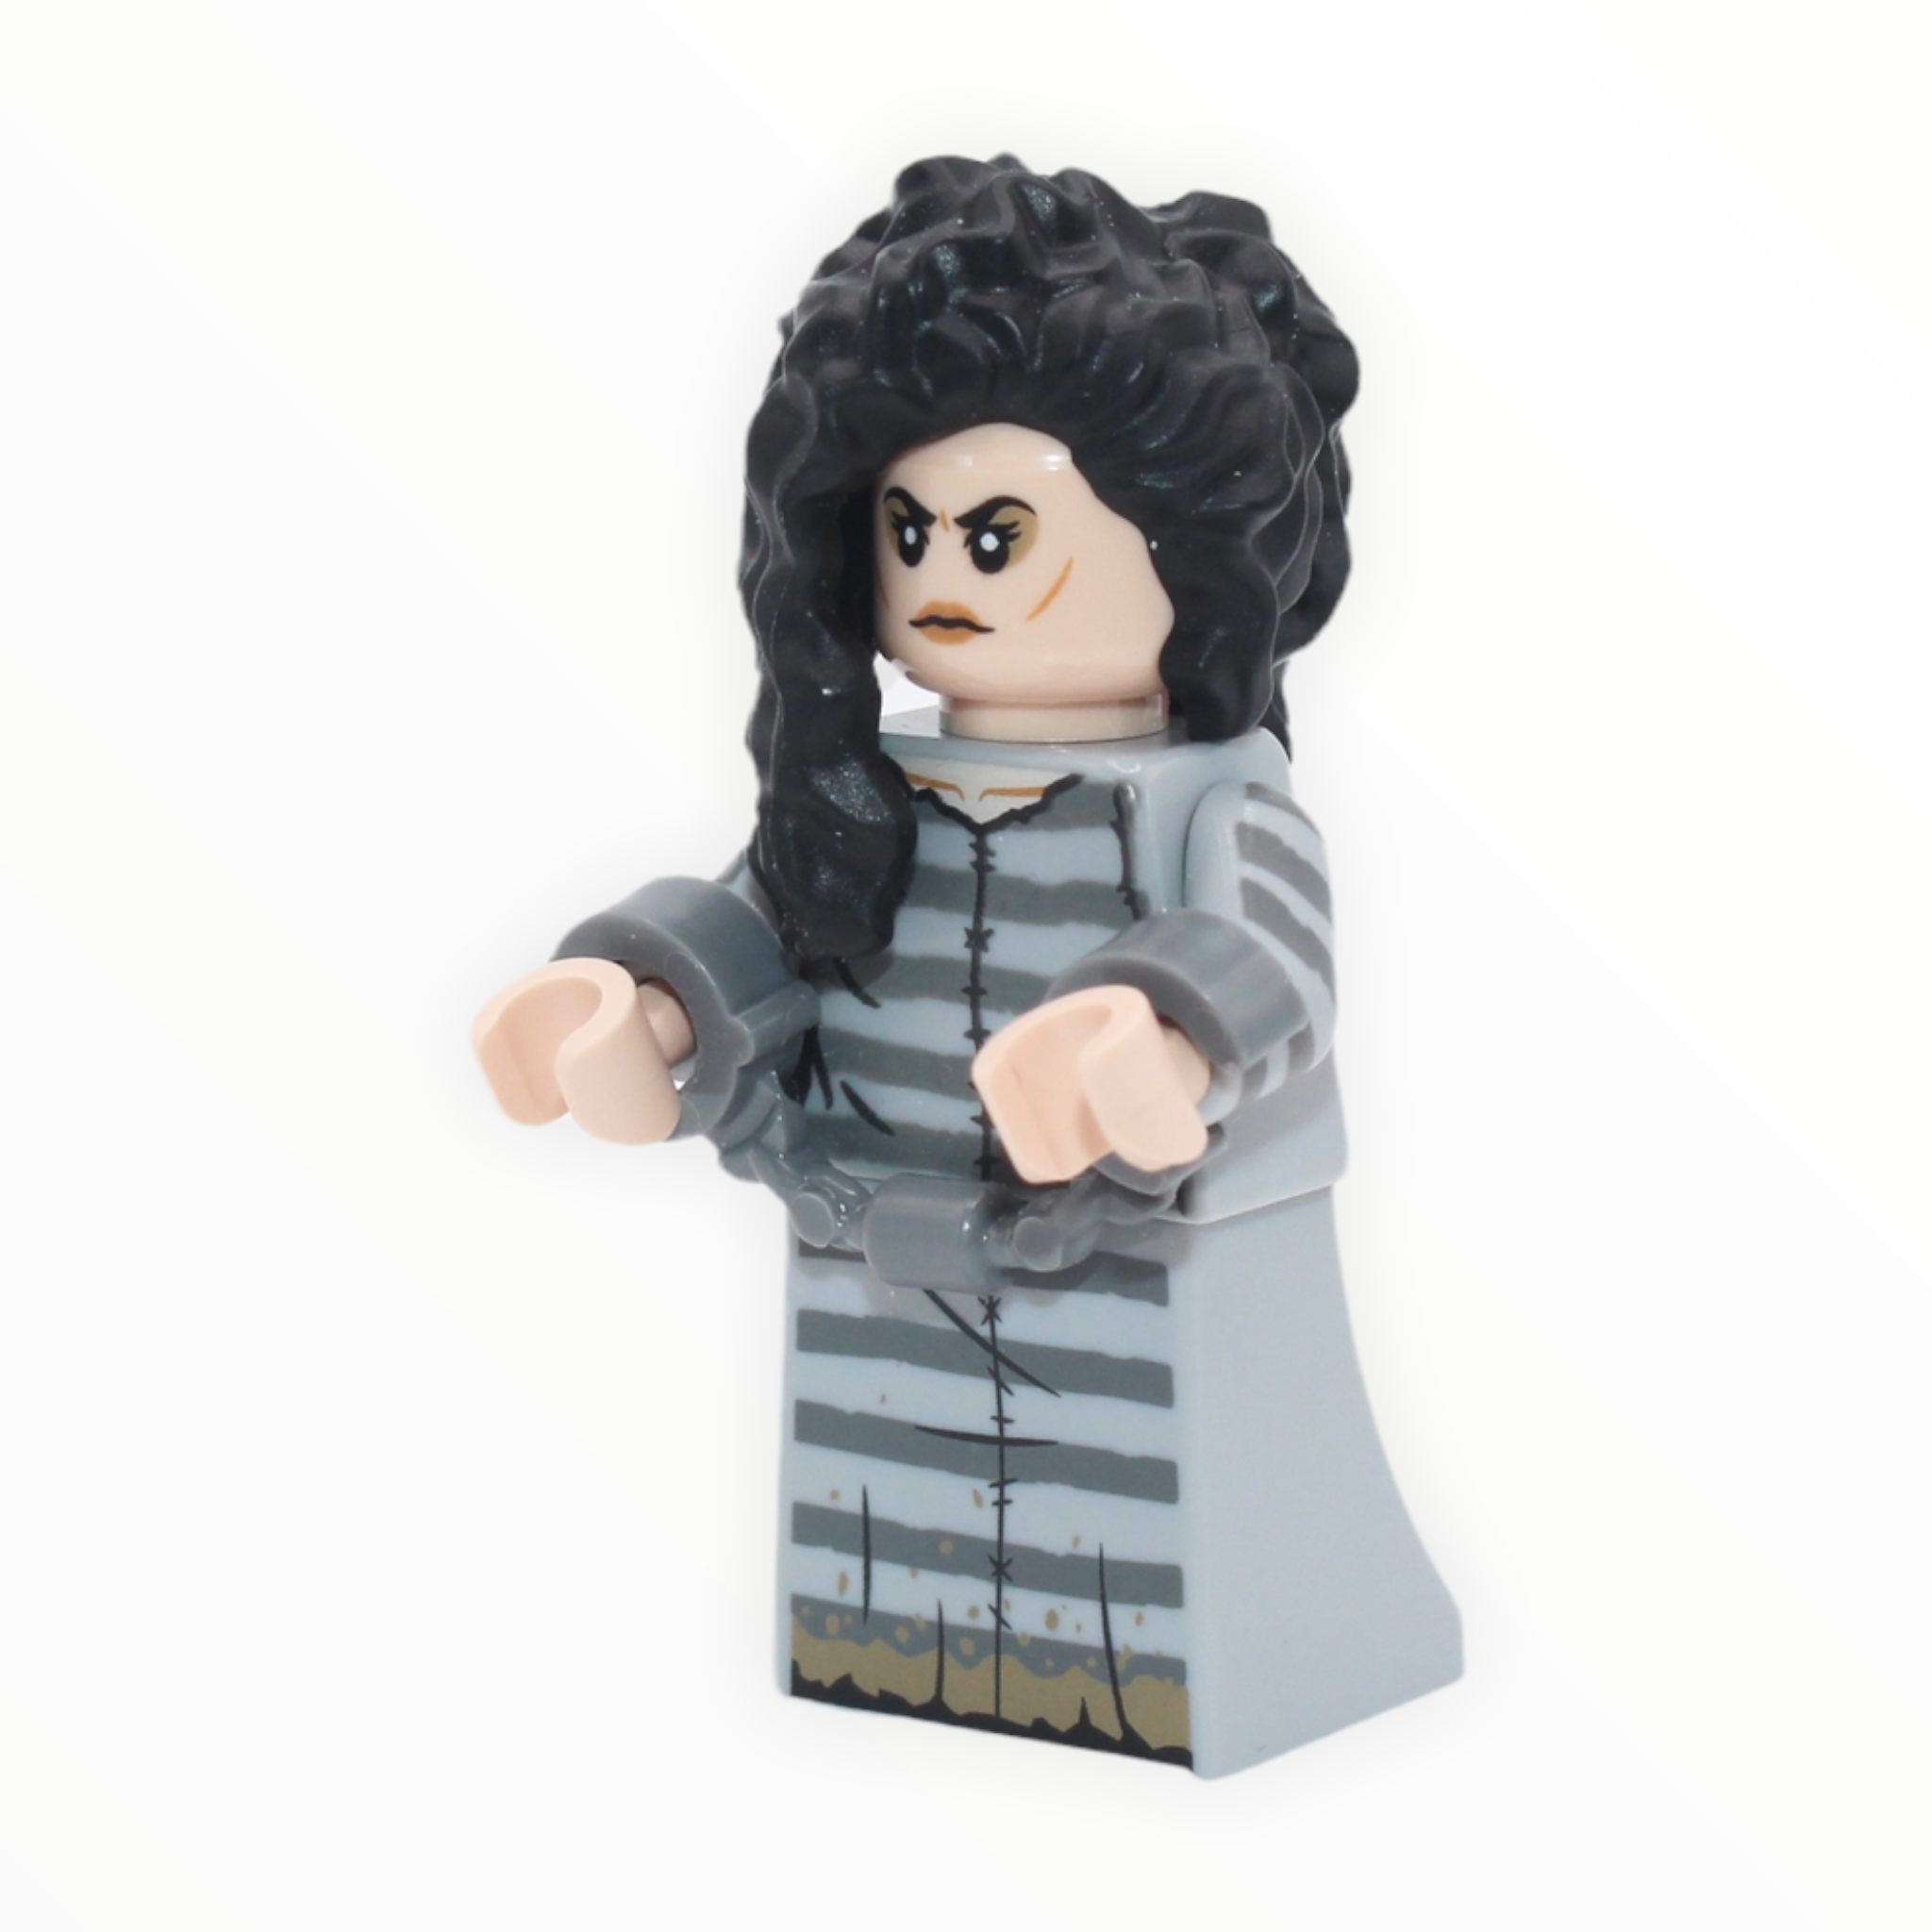 der ovre typisk analyse Harry Potter Series 2: Bellatrix Lestrange in Azkaban outfit